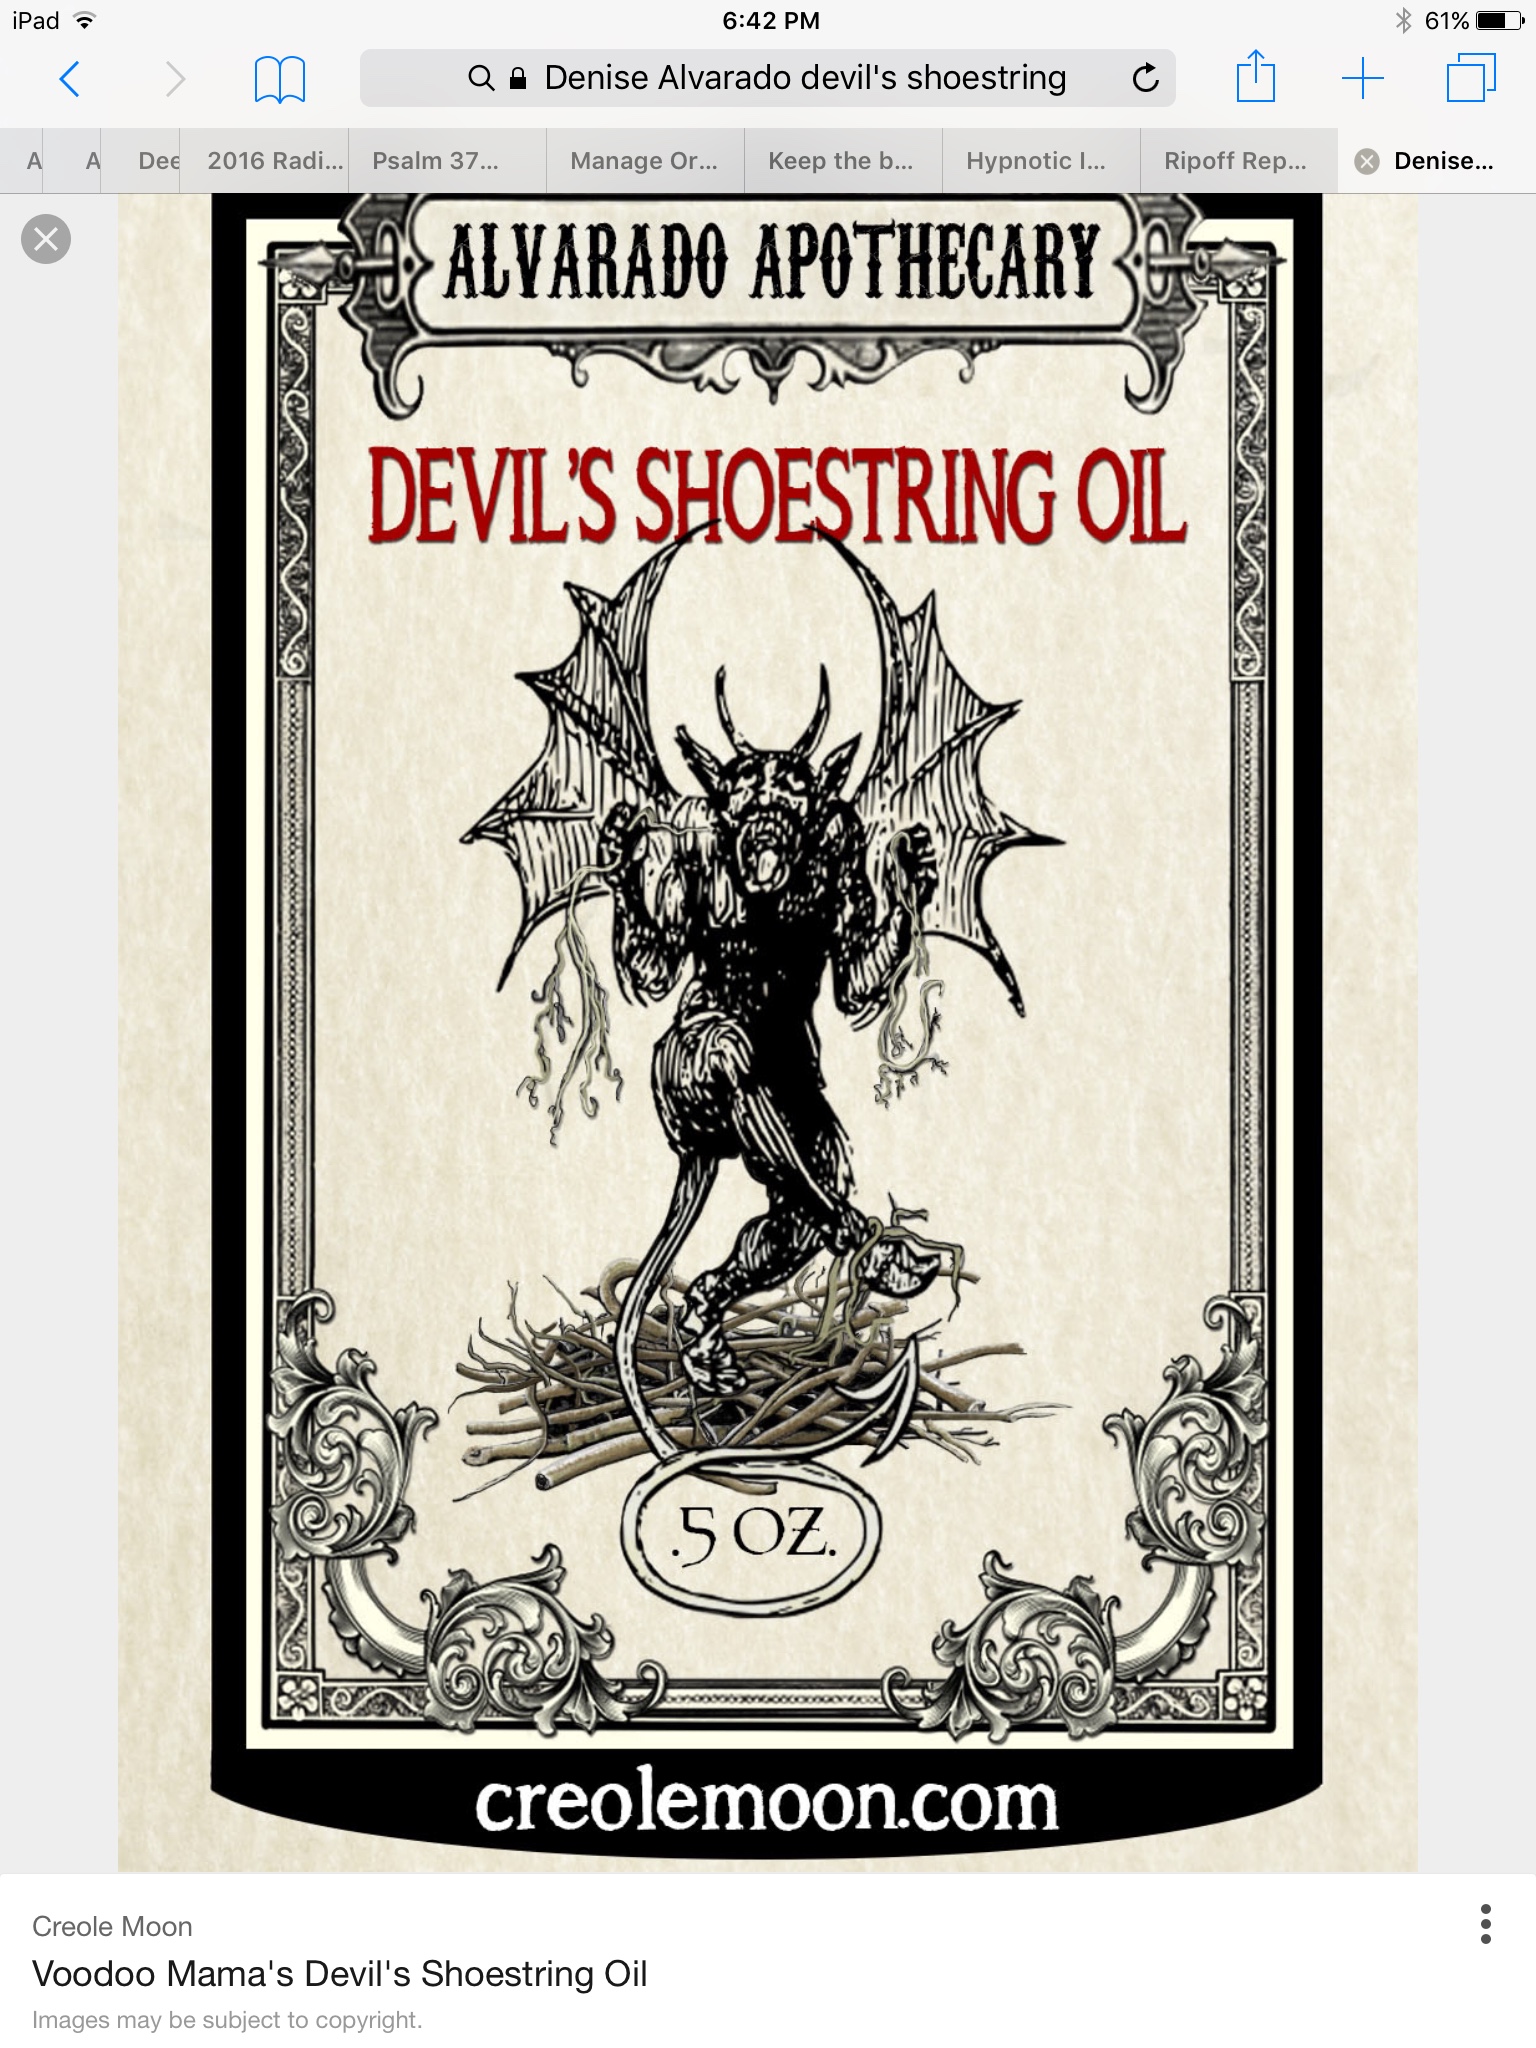 Original Denise Alvarado "Devil's Shoestring Oil" art.